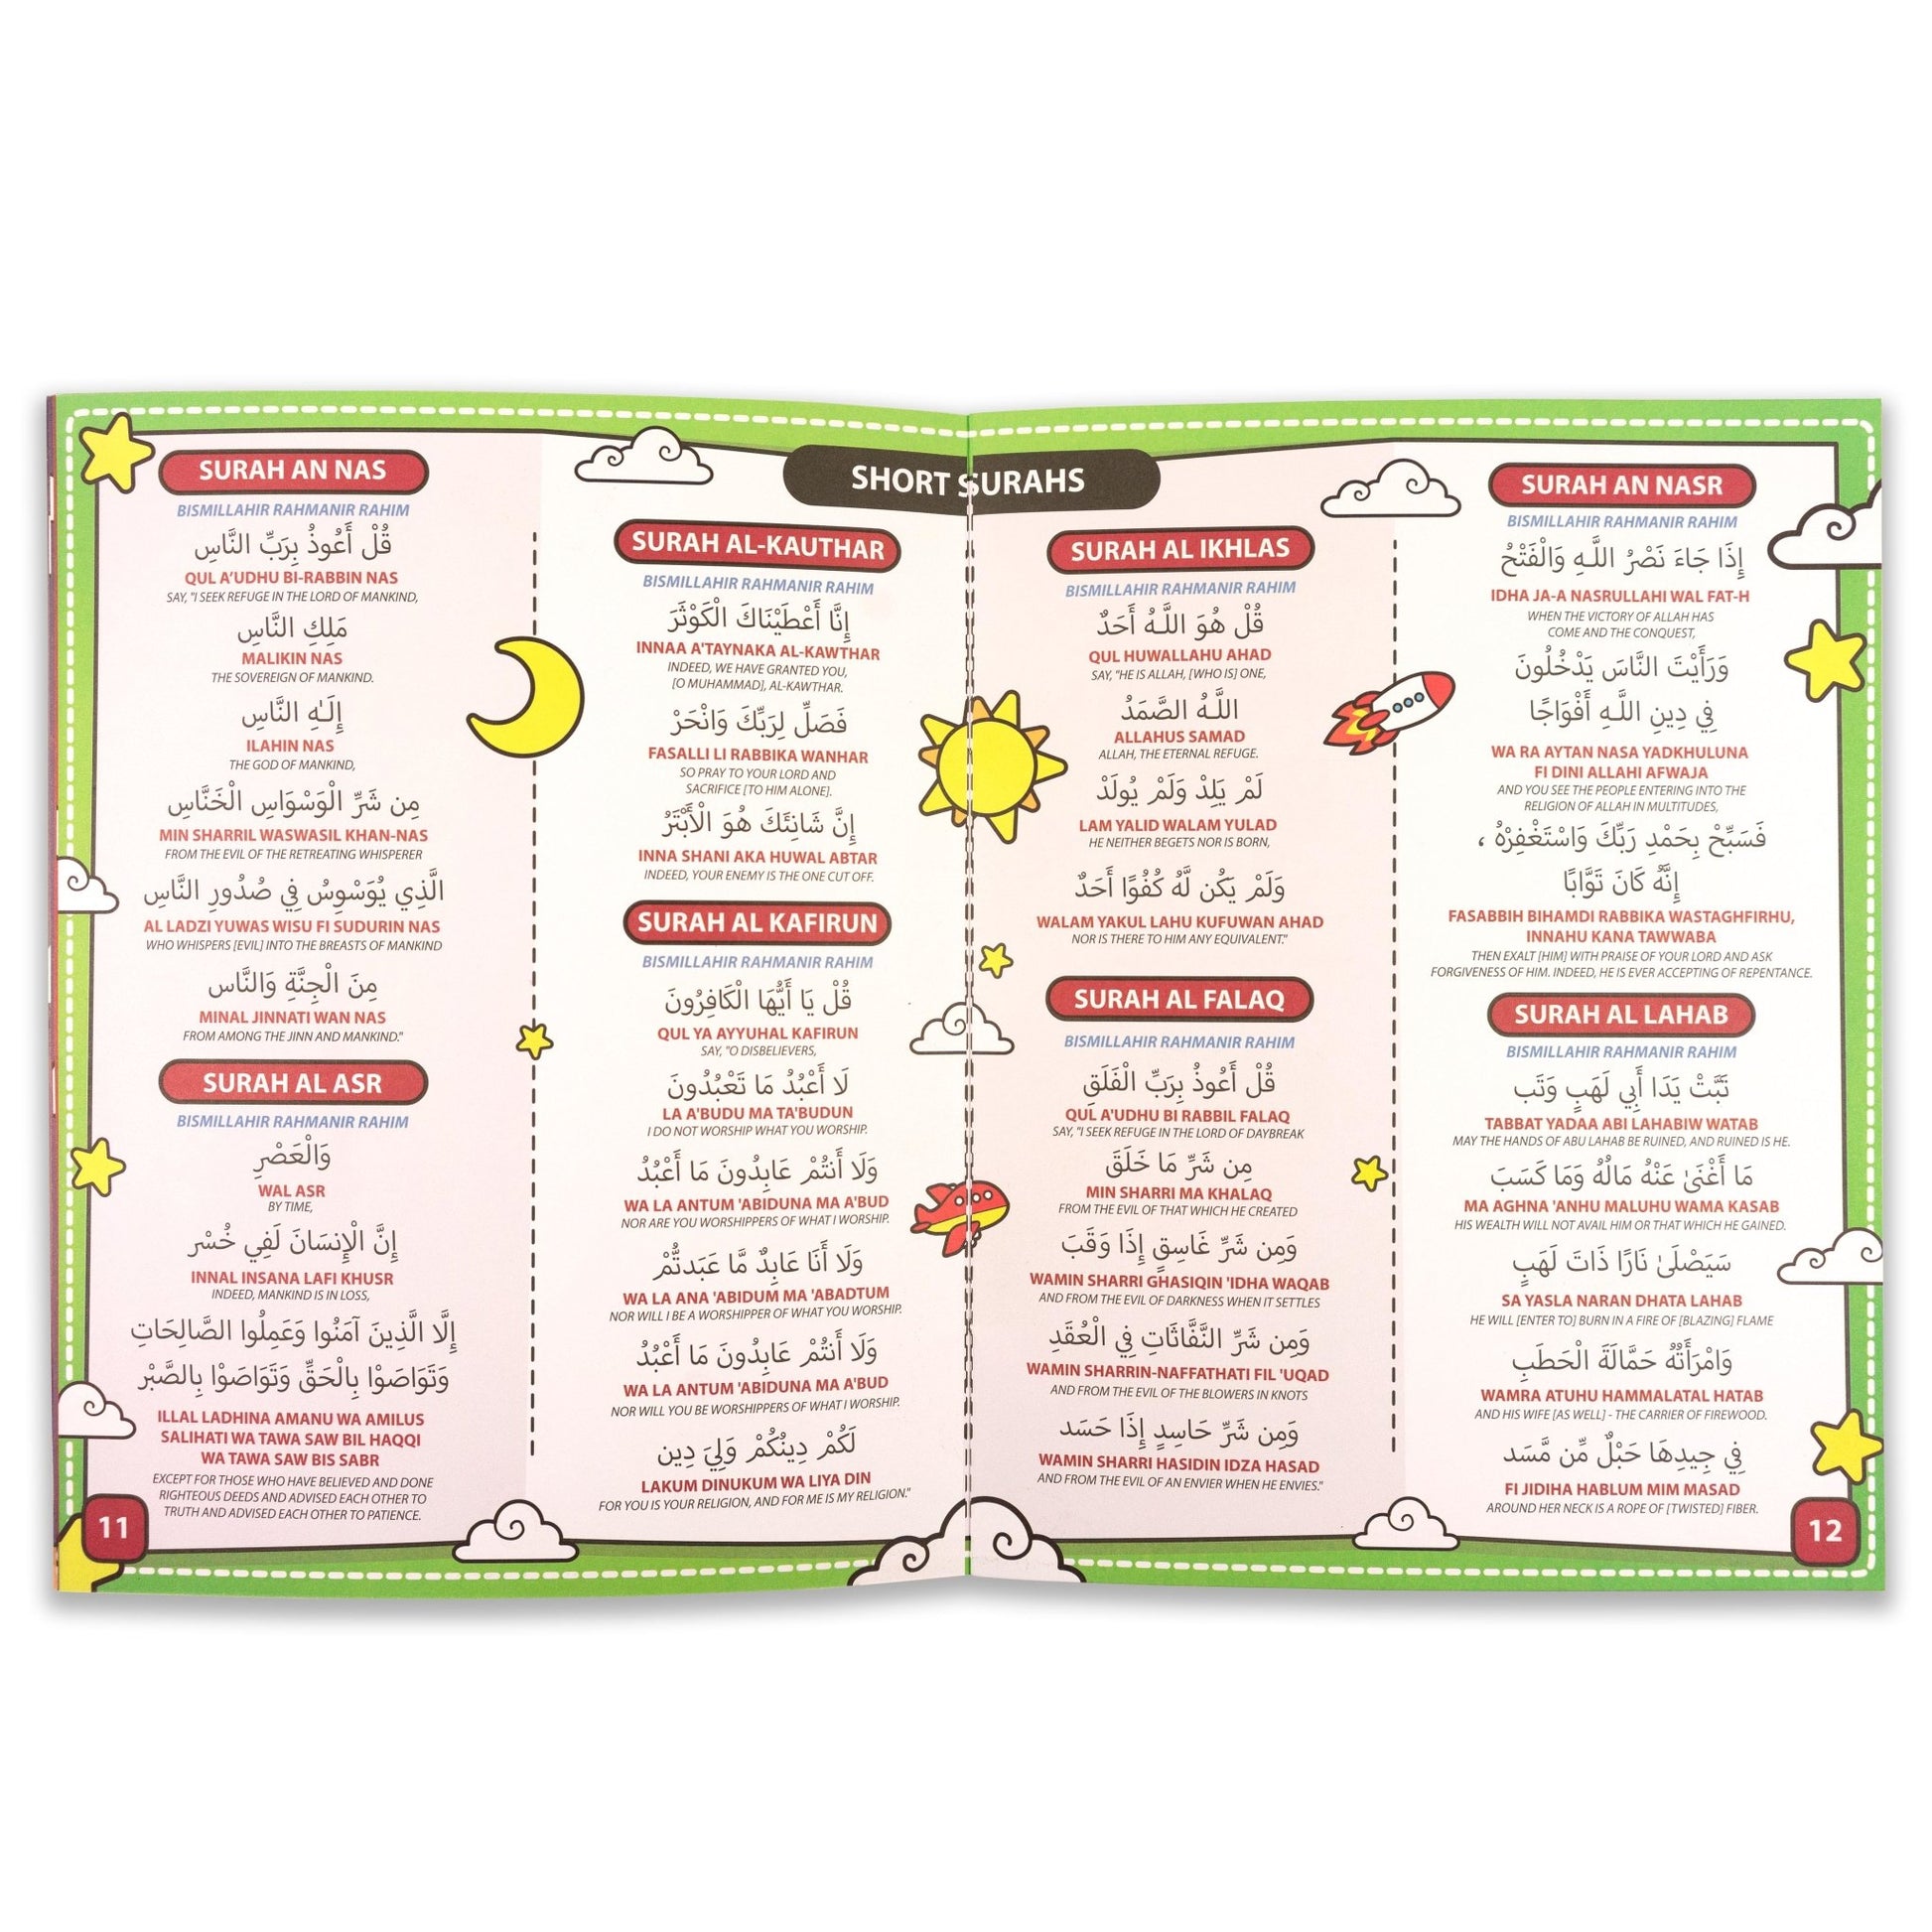 My Salah Mat (Interactive Prayer Mat) - Noor Books